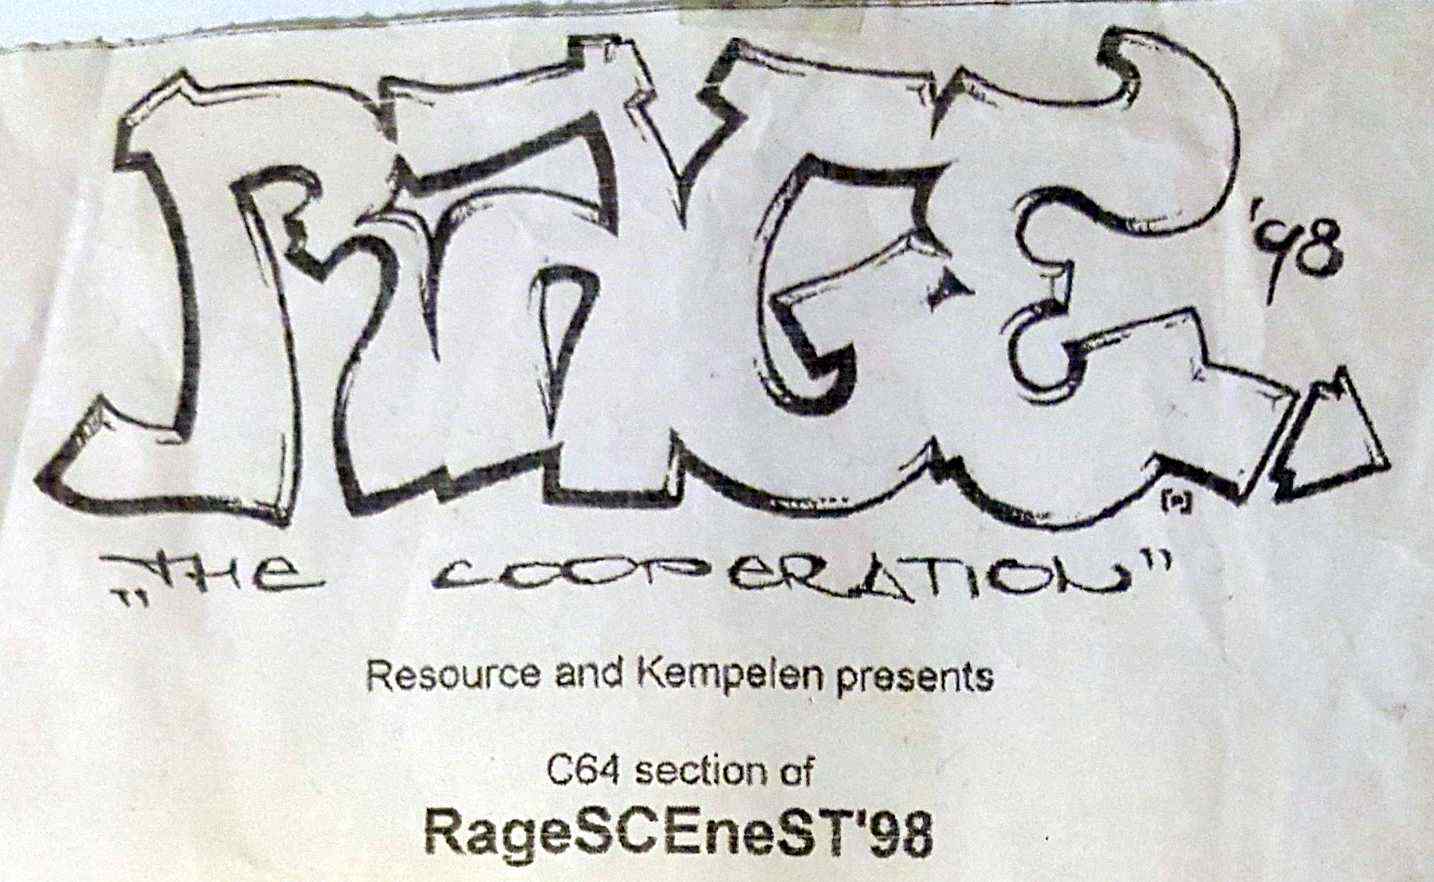 Rage & Scenest 1998